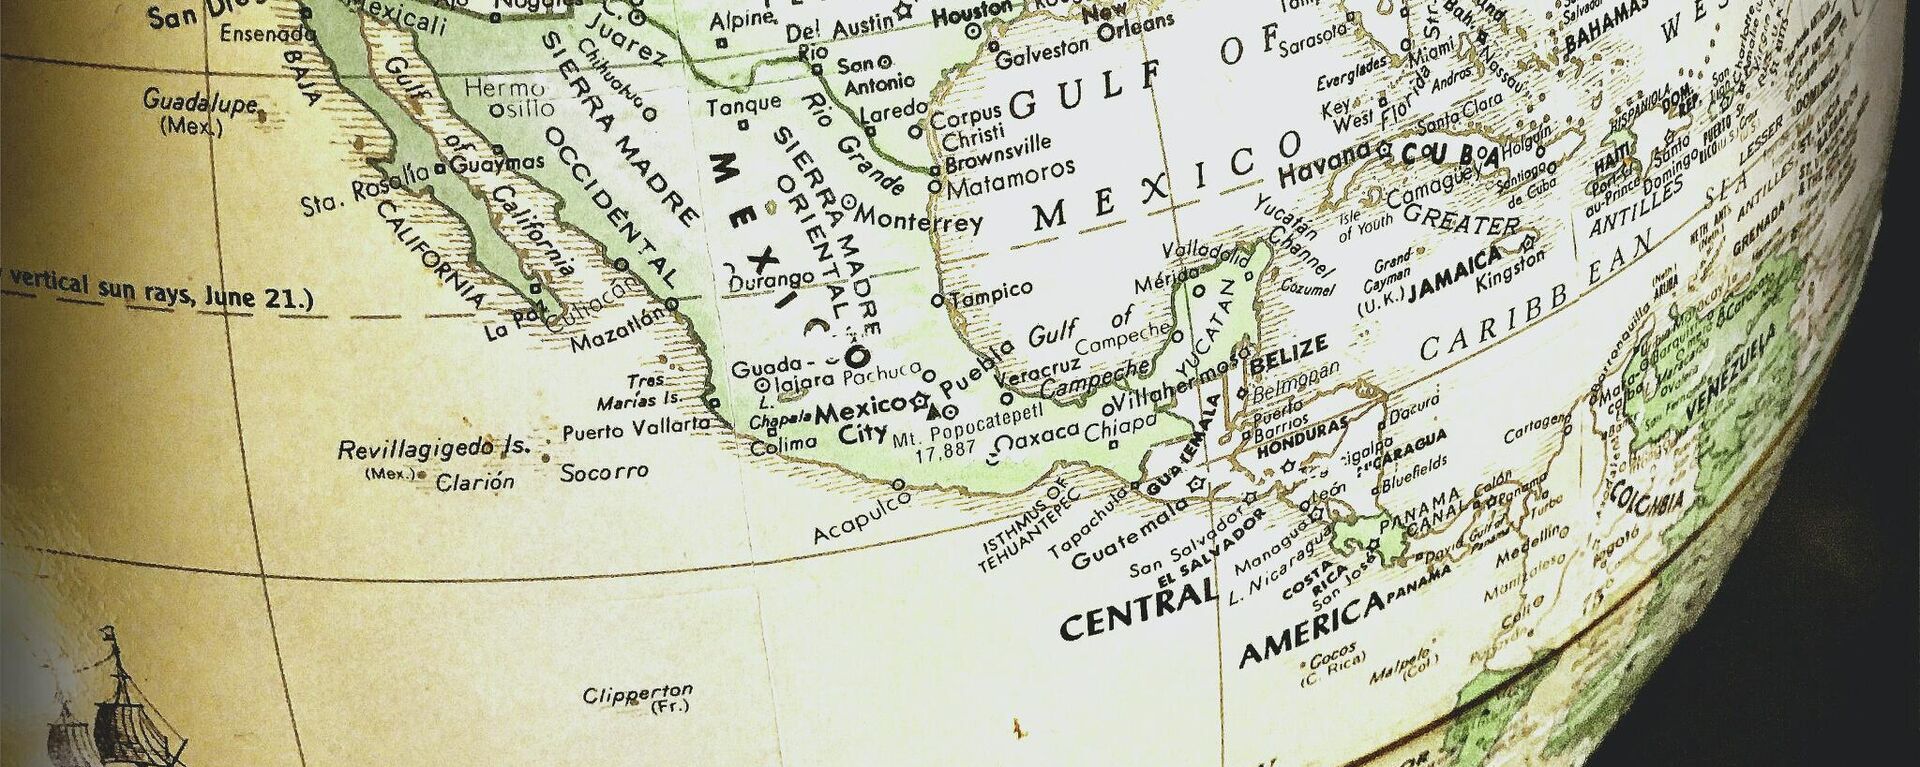 Mapa de Centroamérica - Sputnik Mundo, 1920, 09.07.2021